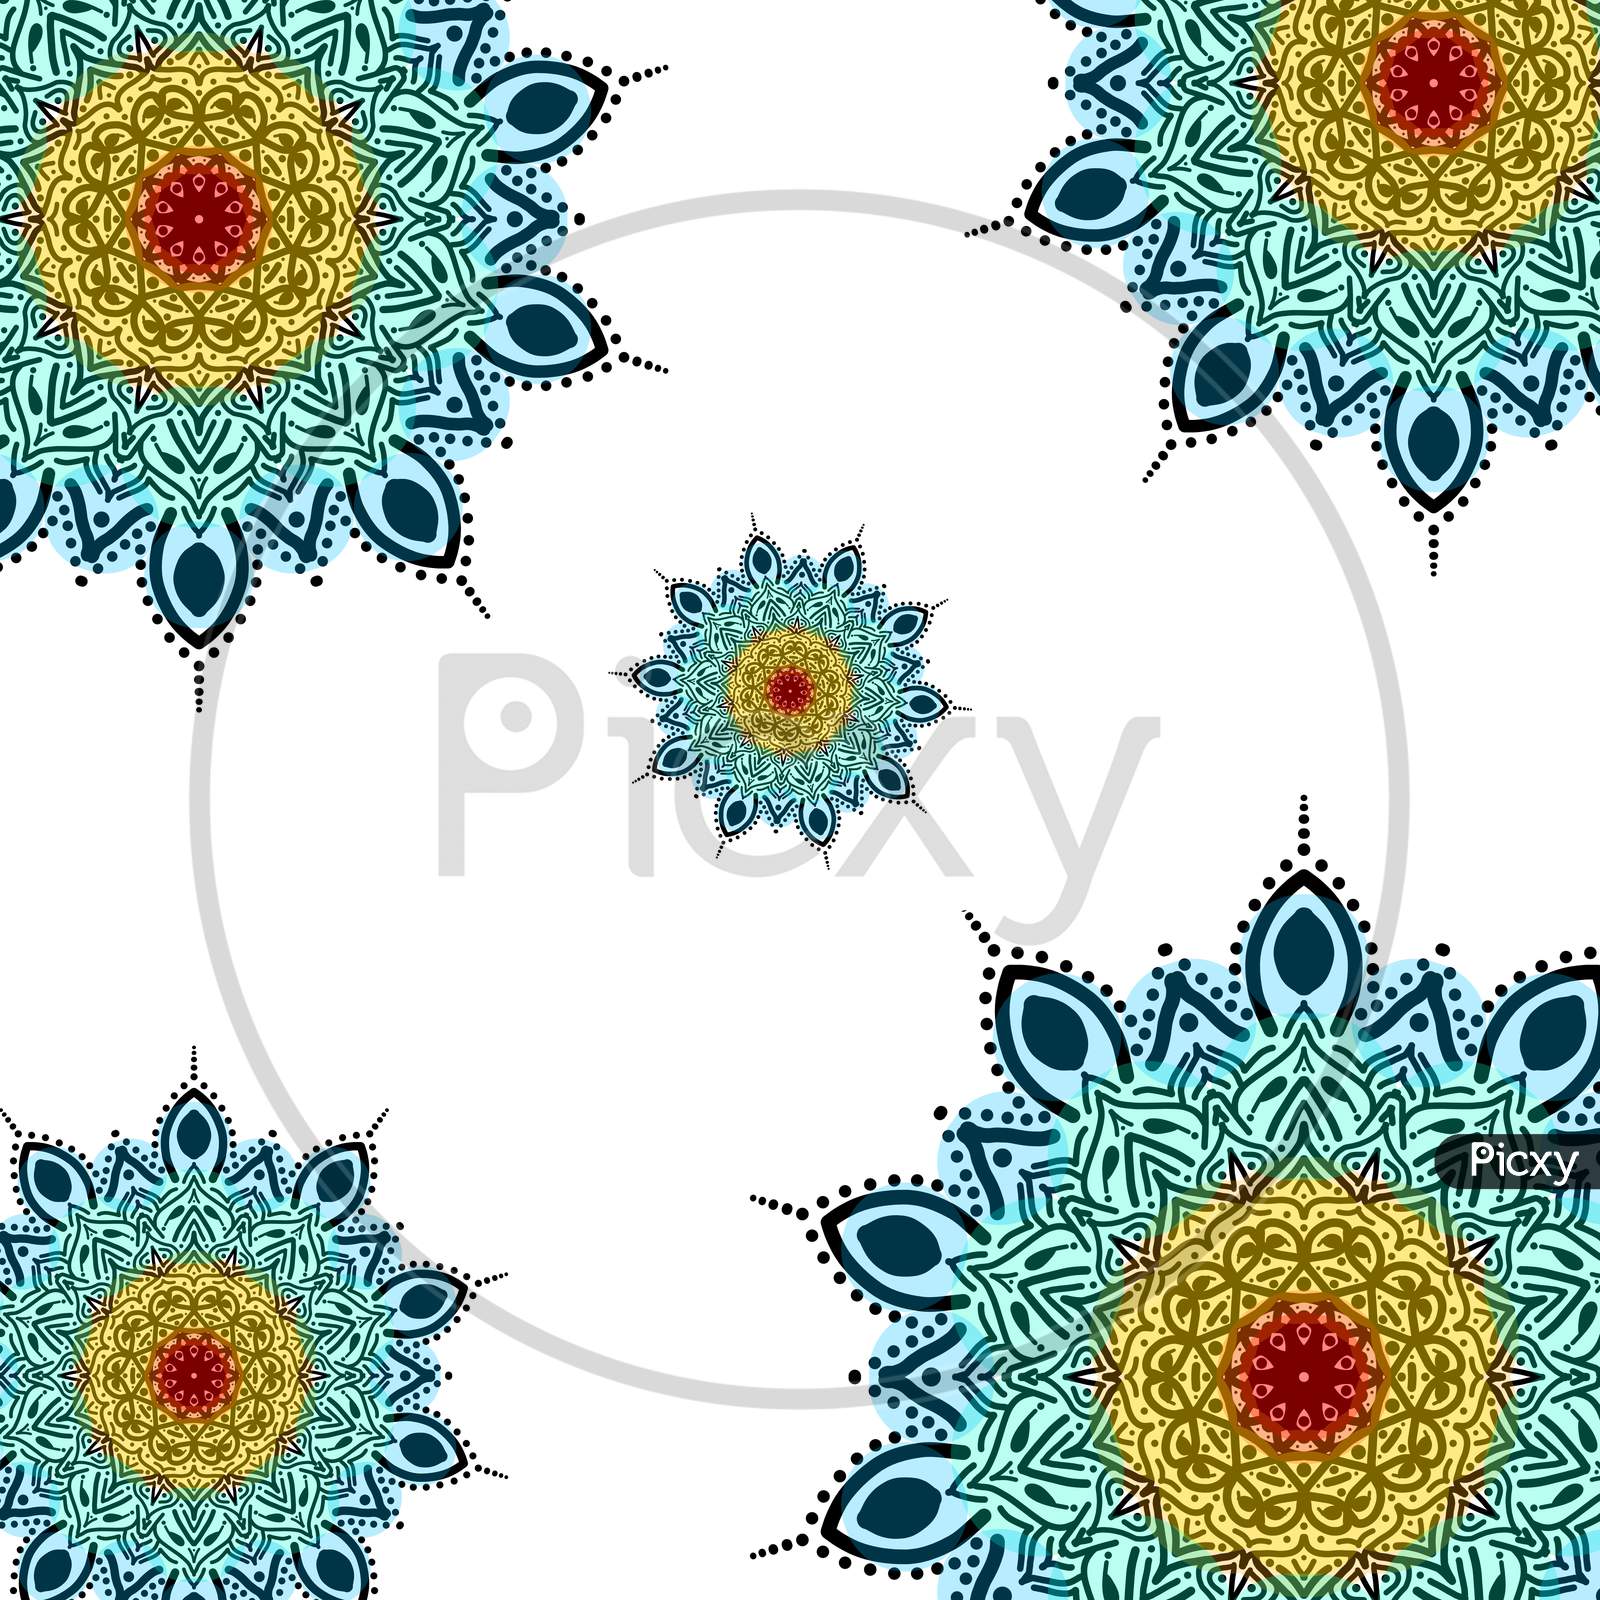 A floral pattern mandala art